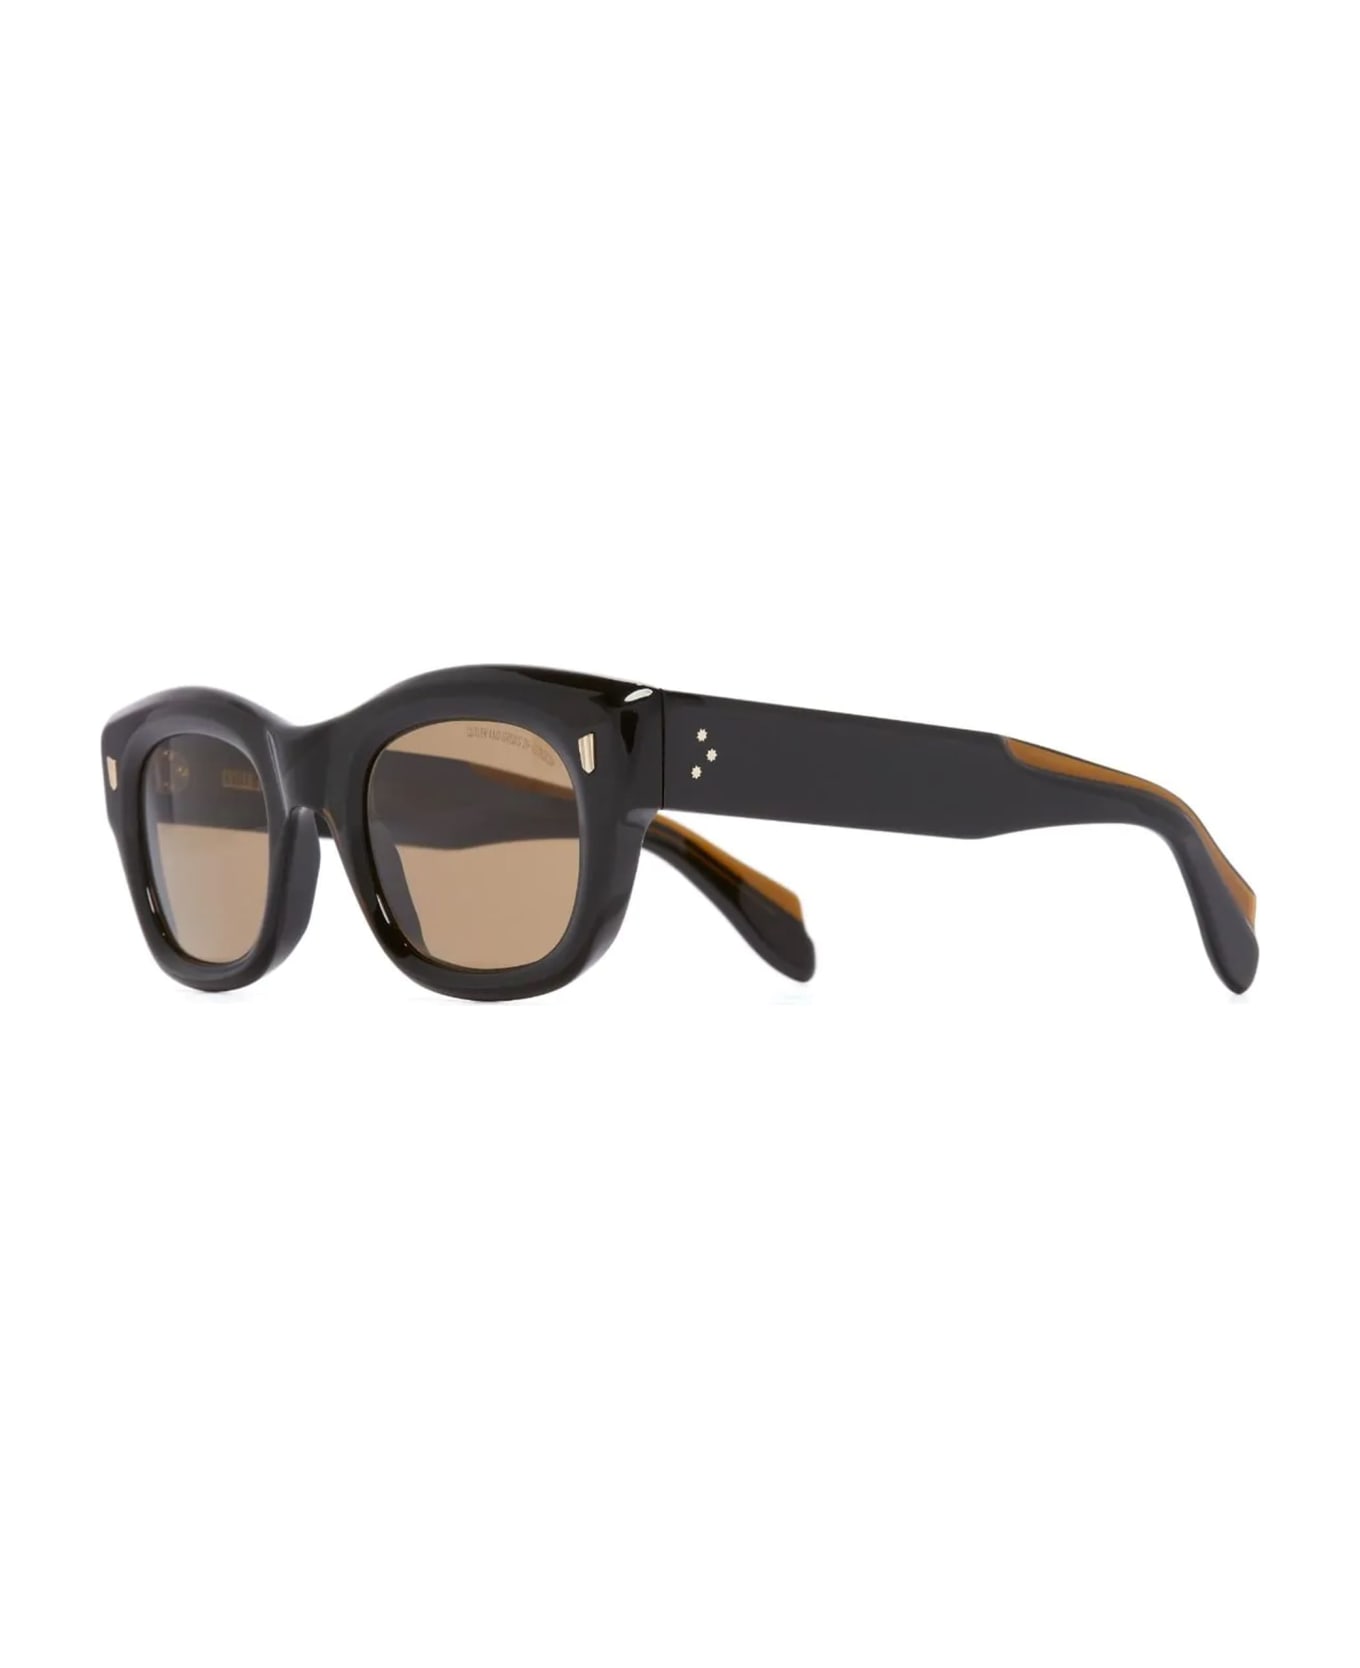 Cutler and Gross 9261 / Olive On Black Sunglasses - Black